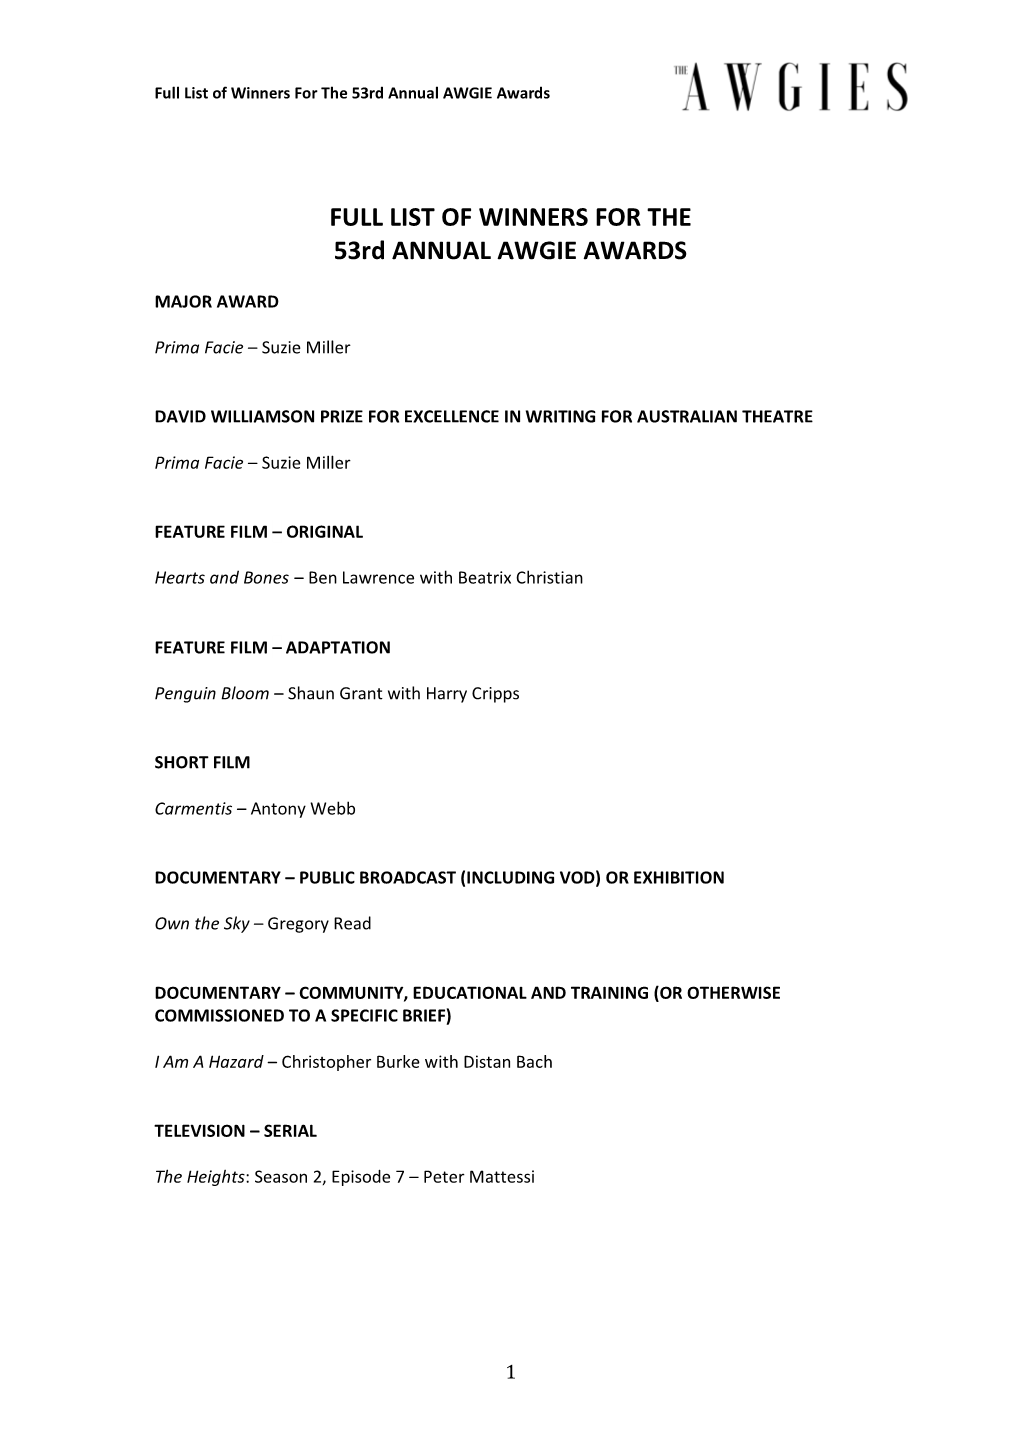 Full List of Winners for the 53Rd Annual AWGIE Awards